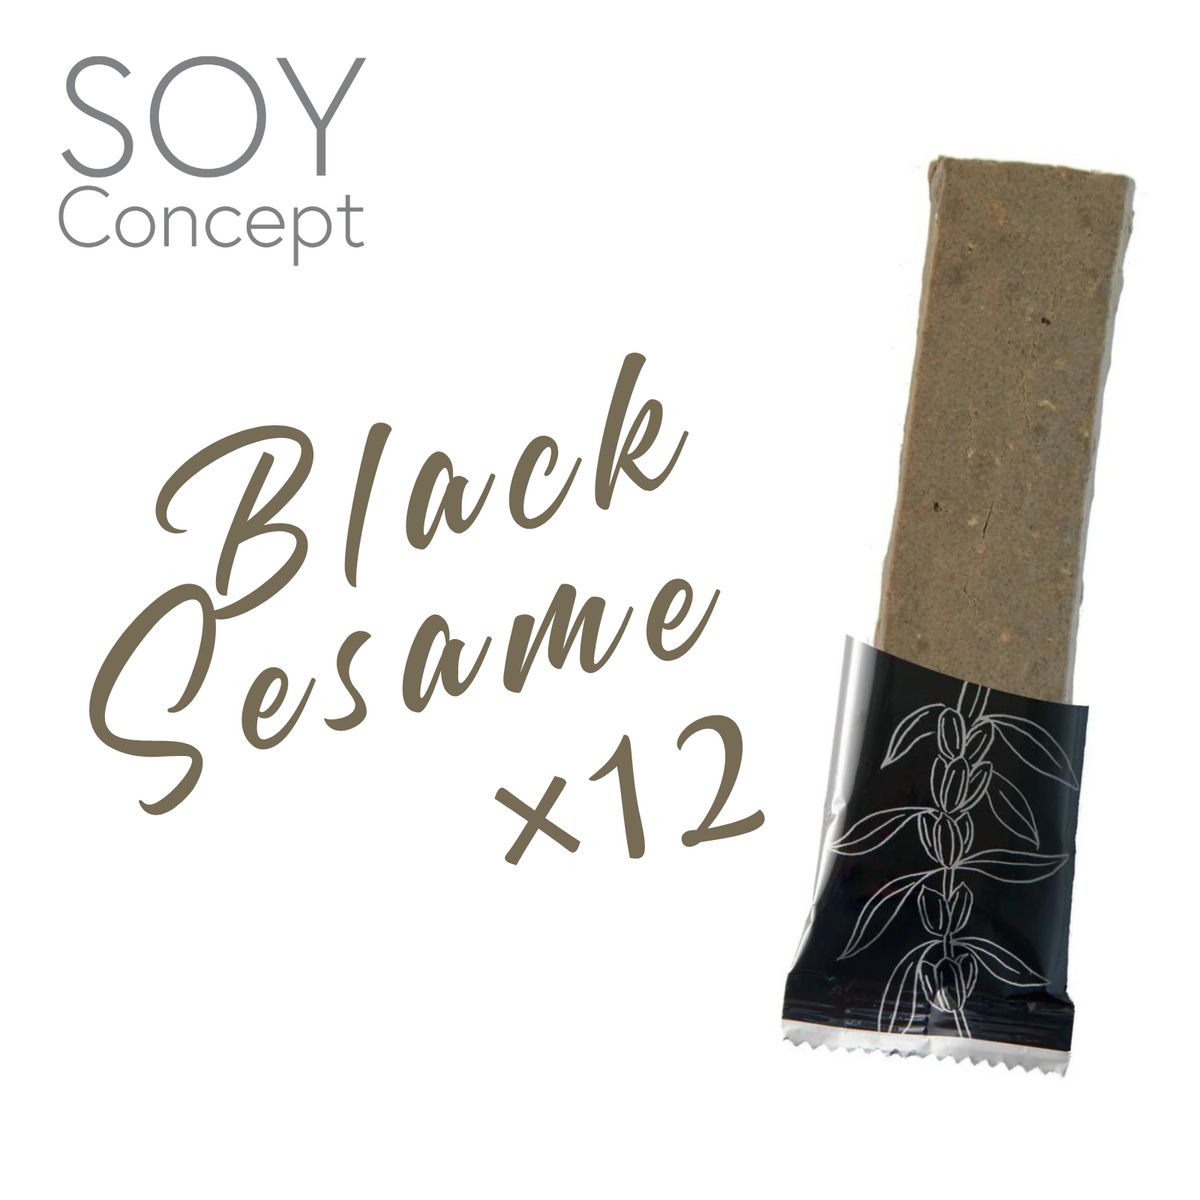 SOY Concept Black Sesame Black Sesame (12 per box)